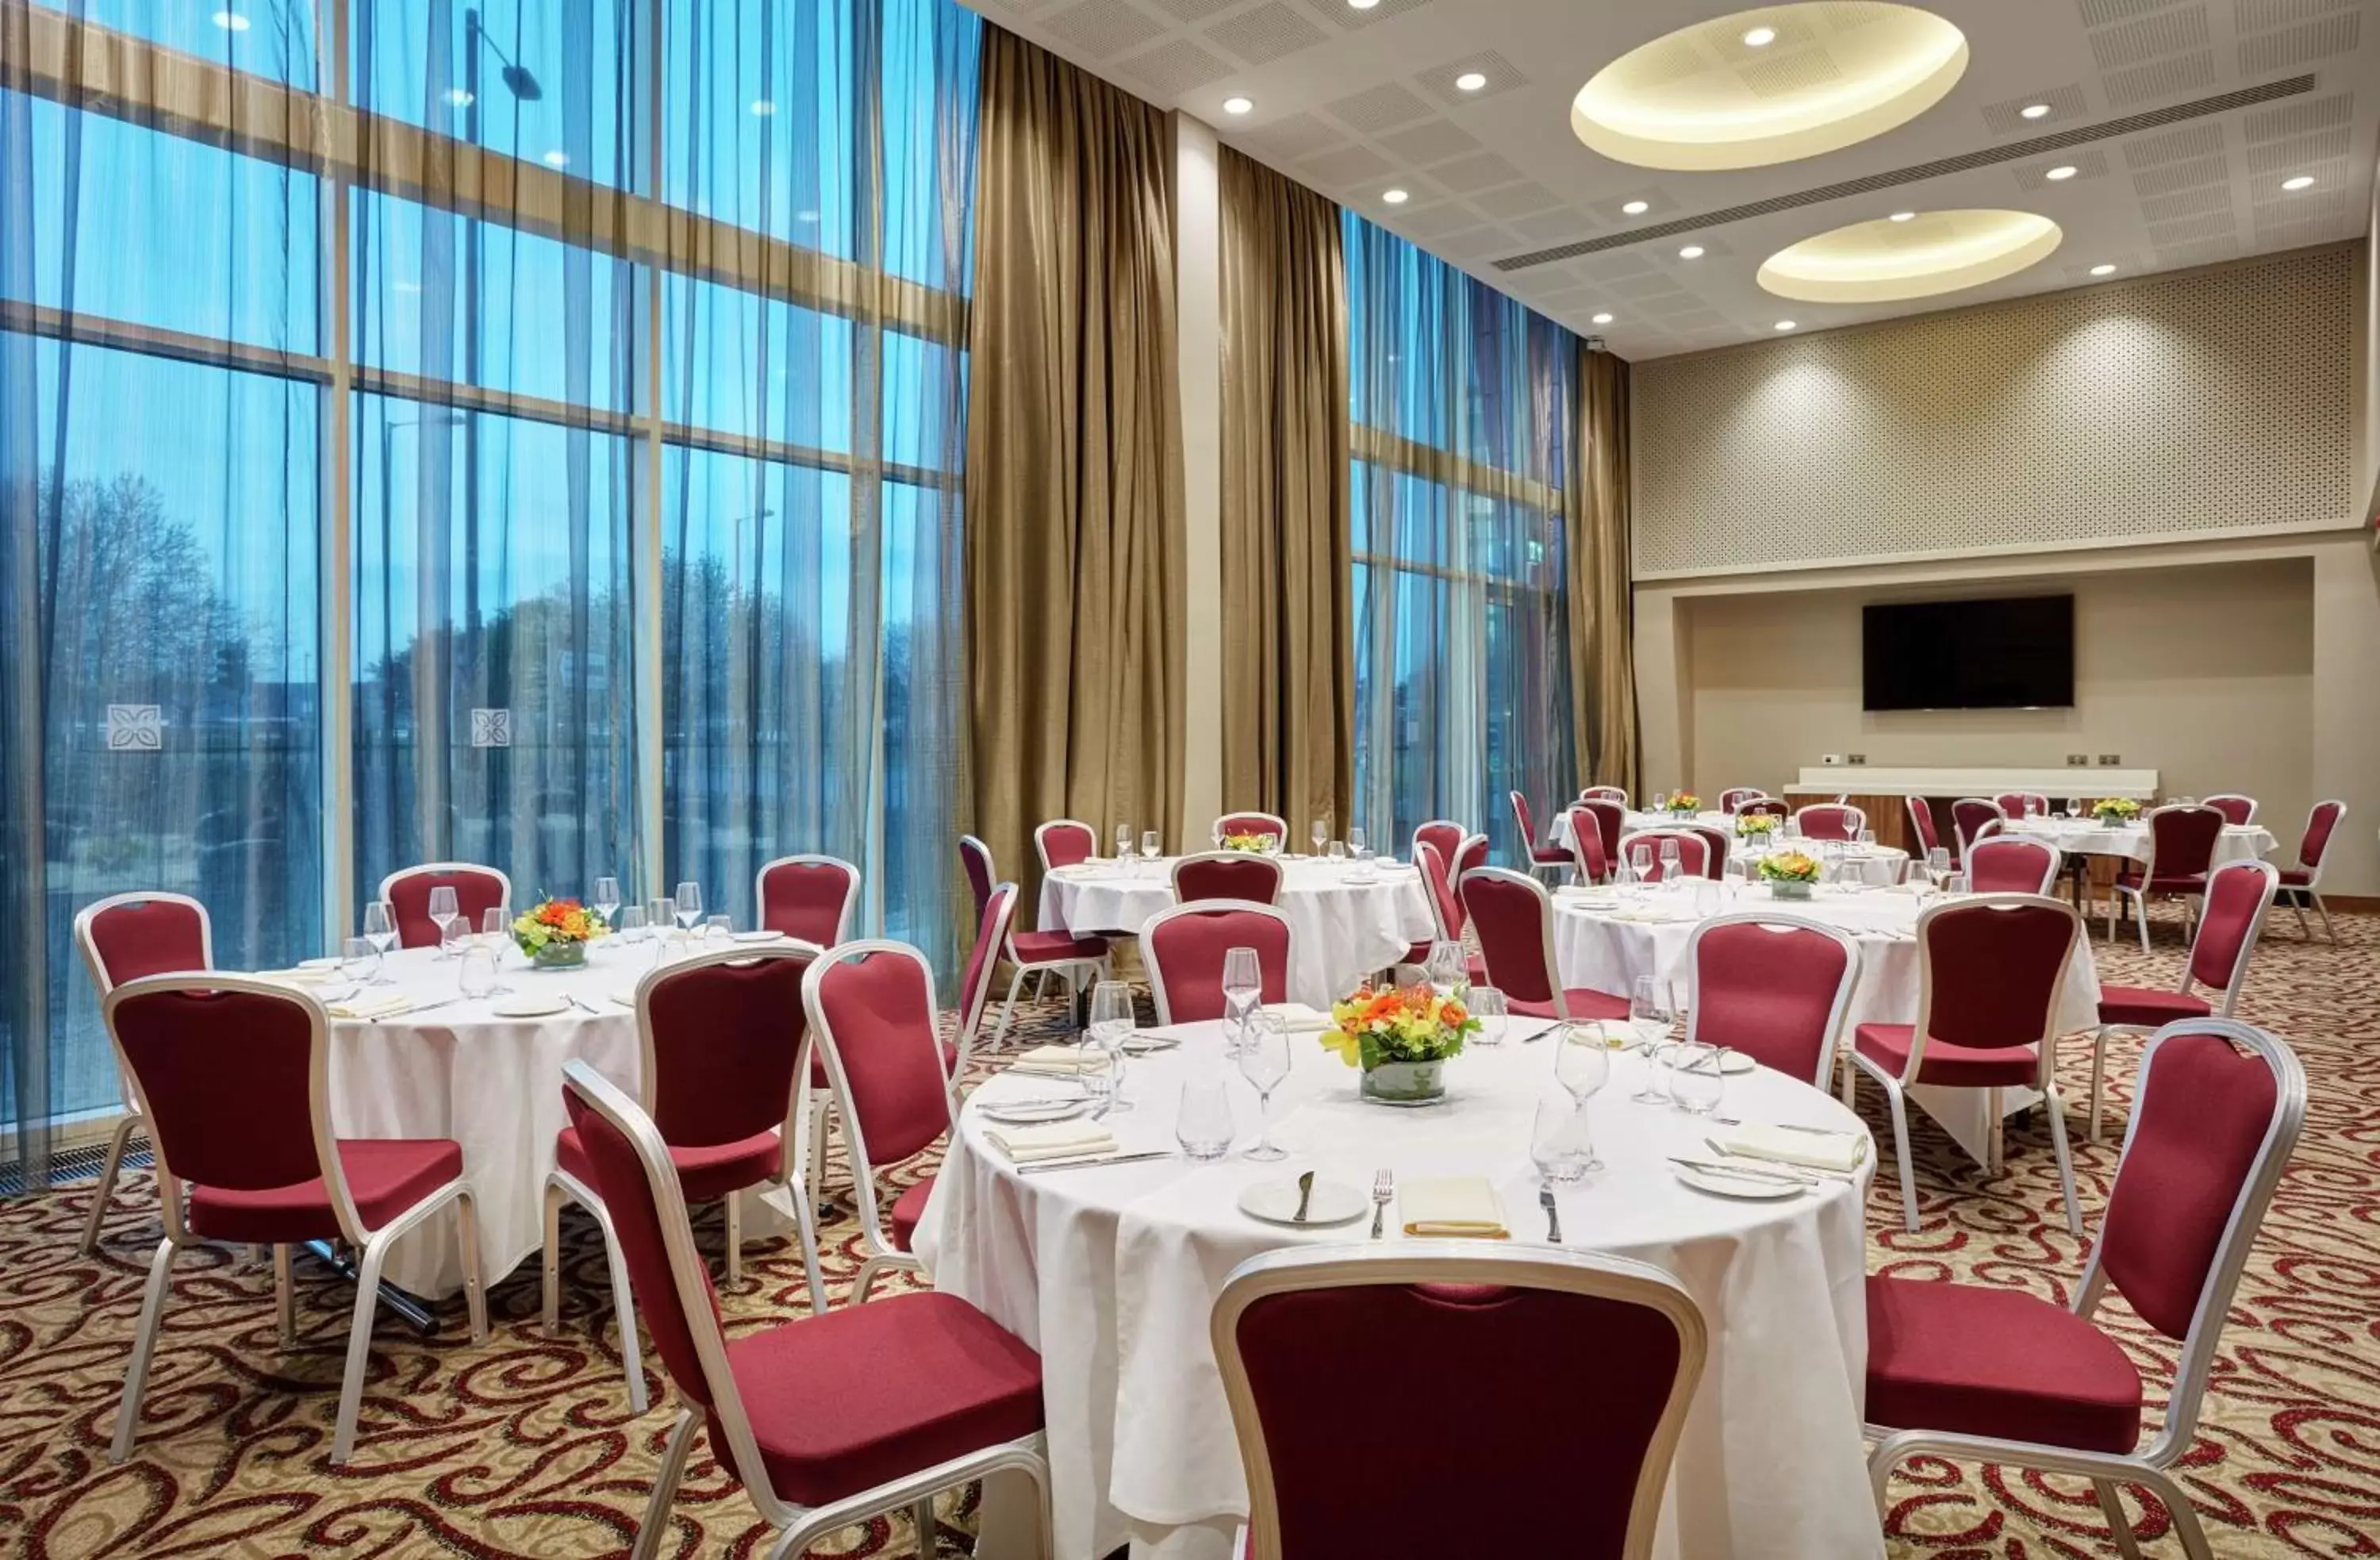 Meeting/conference room, Restaurant/Places to Eat in Hilton Garden Inn Sunderland